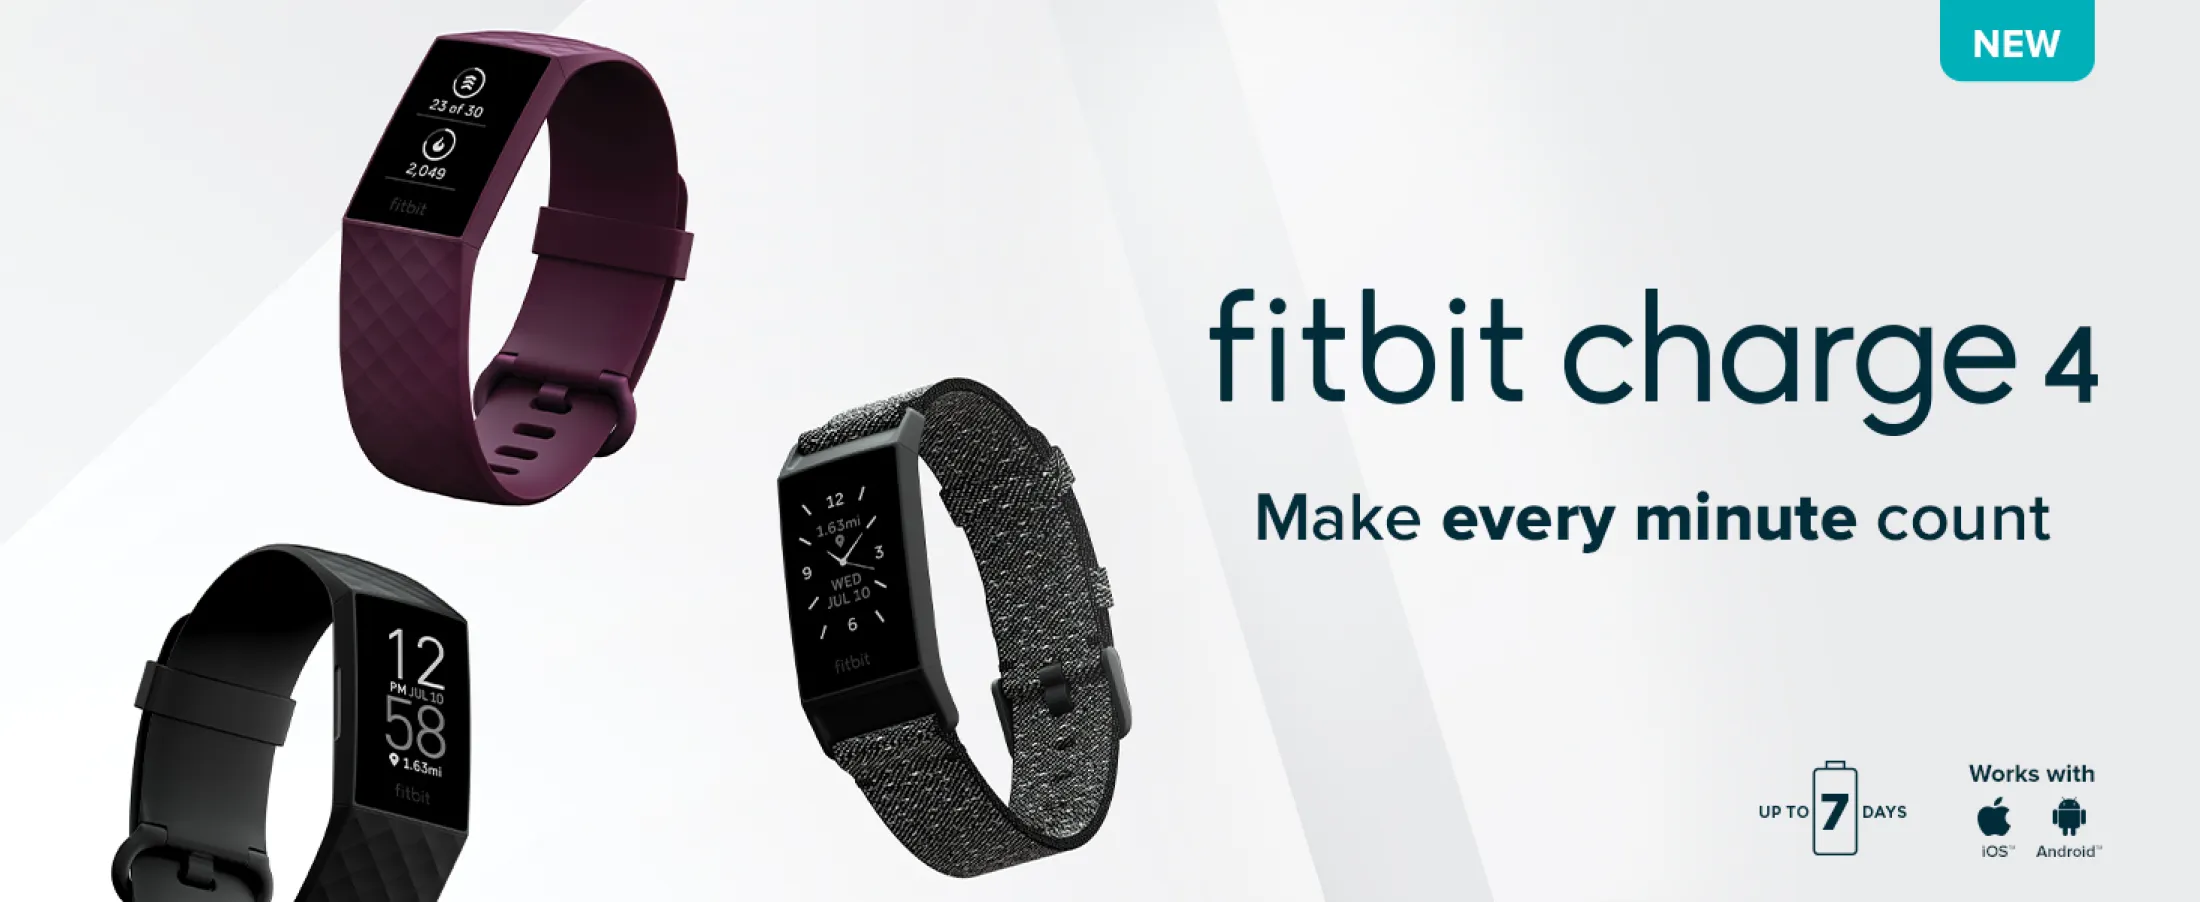 Fitbit Charge 4 Lazada Deals, 54% OFF | www.ingeniovirtual.com